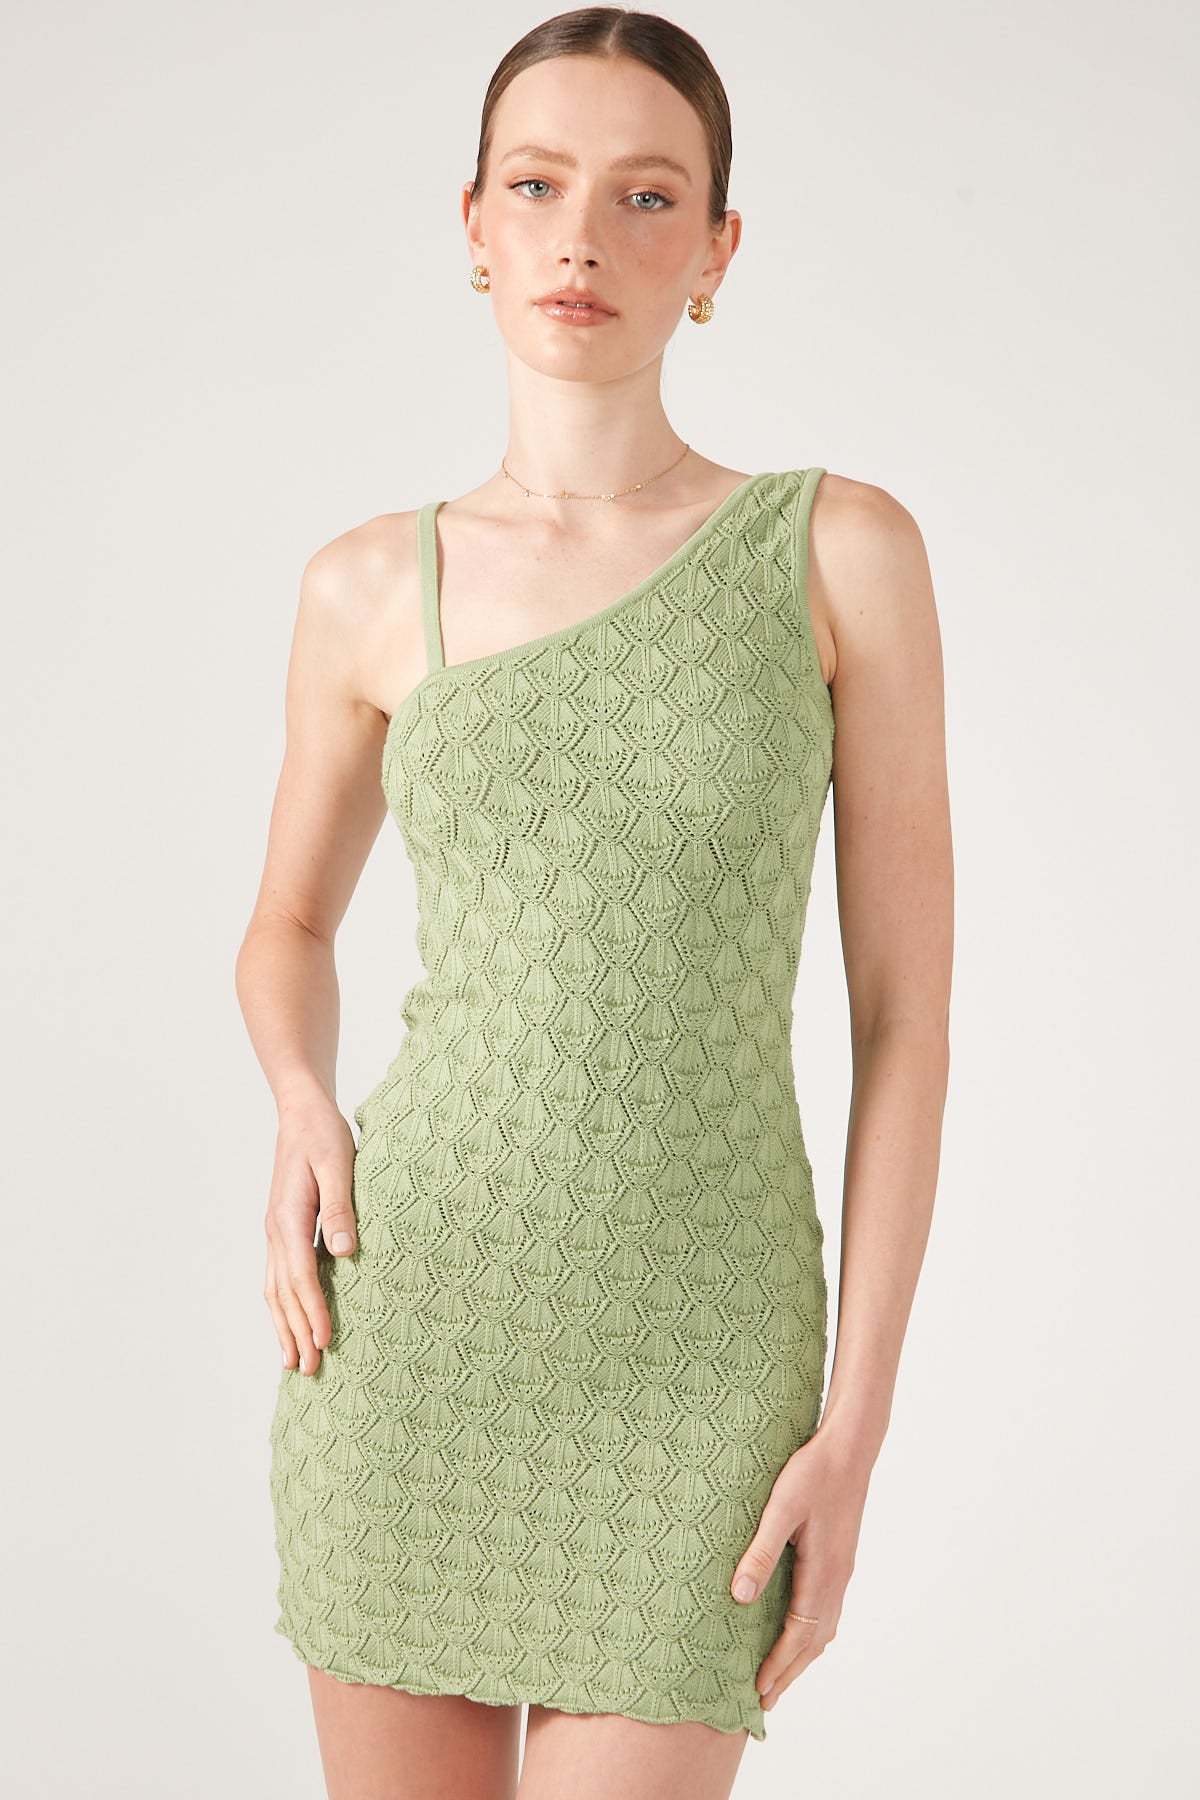 Perfect Stranger Dominique Elissa Golden Hour Crochet Knit Mini Dress Green